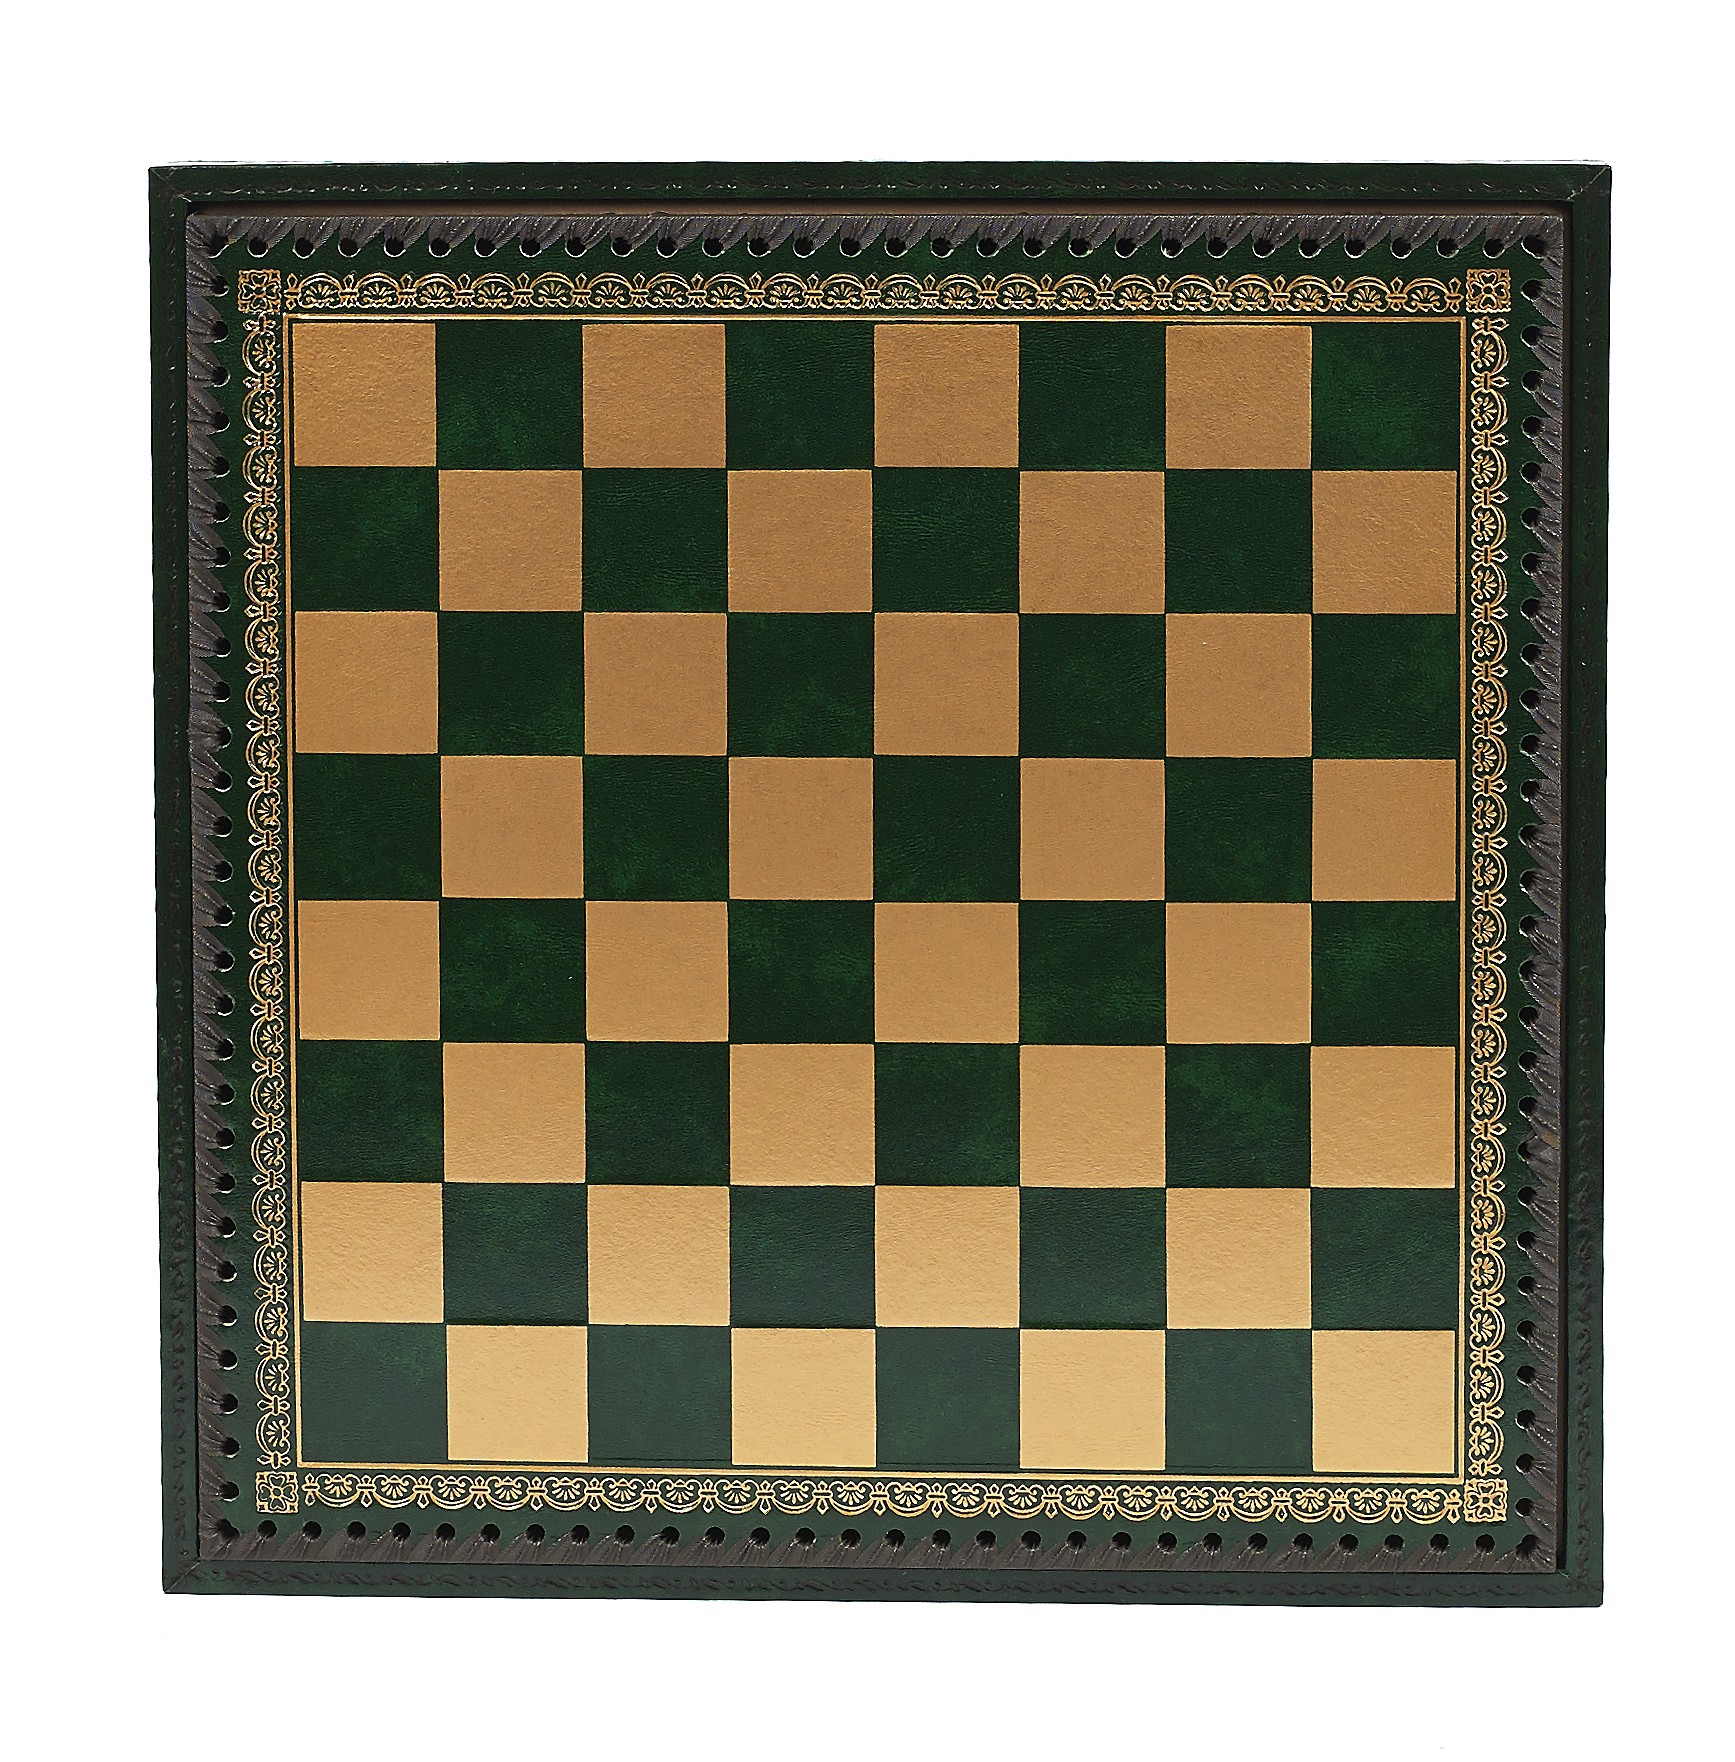 Chessboard. Шахматная доска. Доска для шашек. Шахматное поле. Шахматная доска для печати.